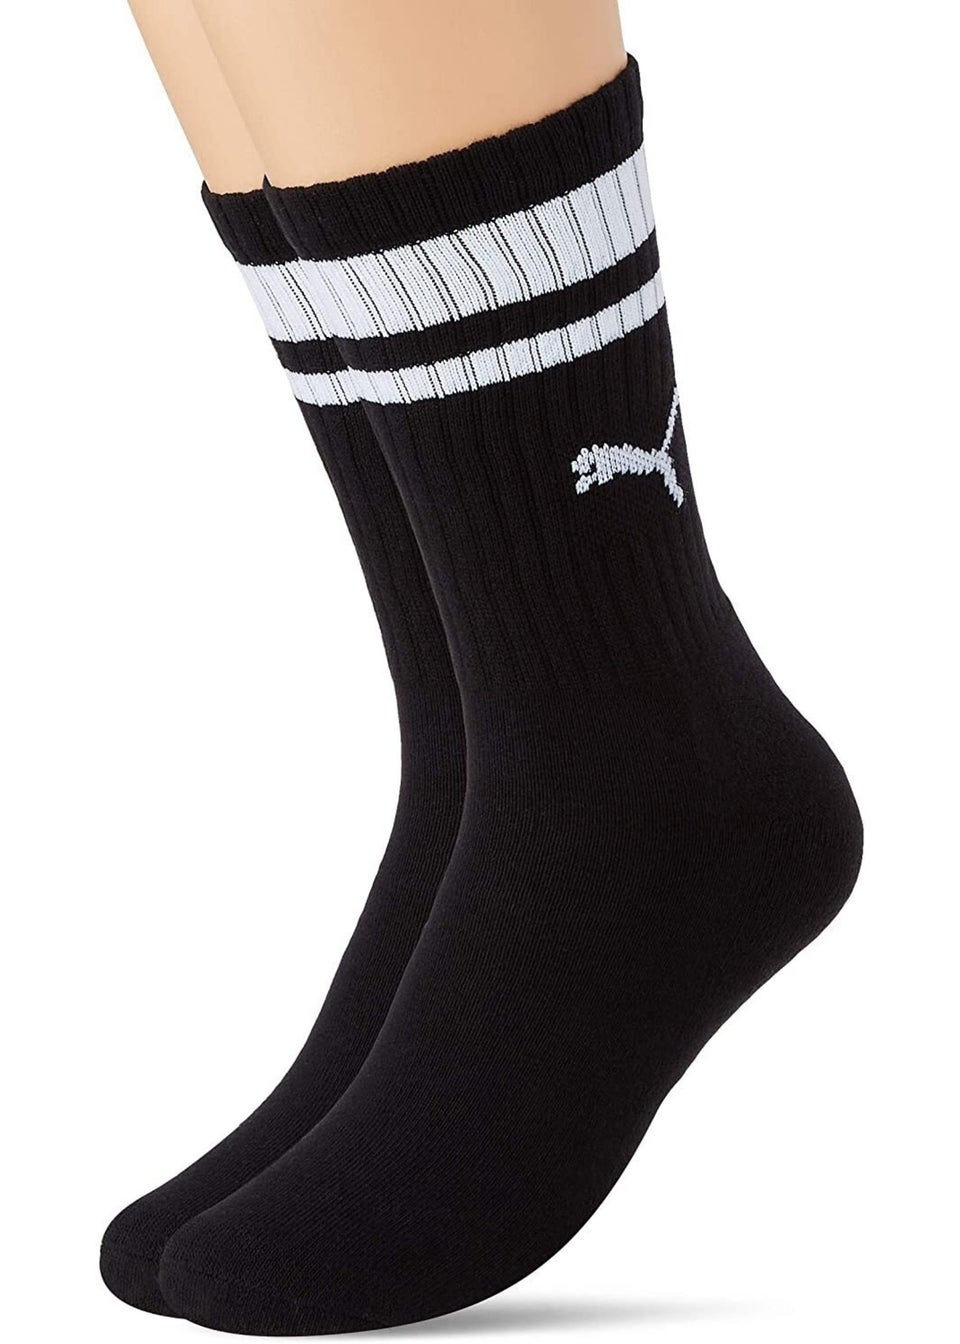 Puma Black/White Heritage Stripe Crew Socks (Pack of 2)